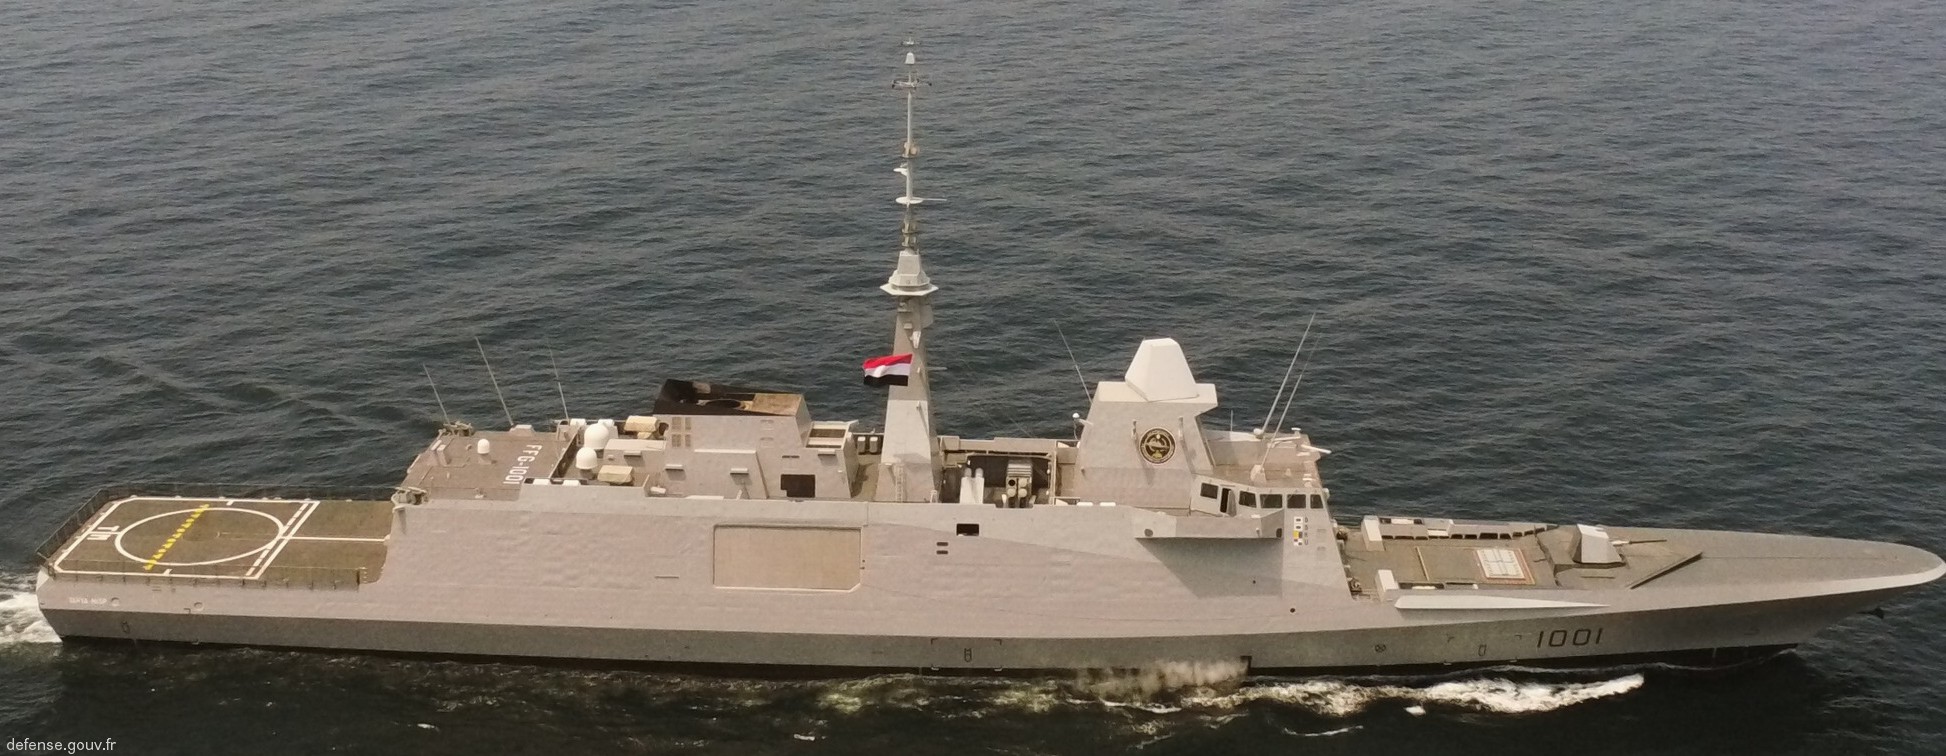 ffg 1001 ens tahya misr fremm class multipurpose frigate egyptian naval force navy dcns 03x